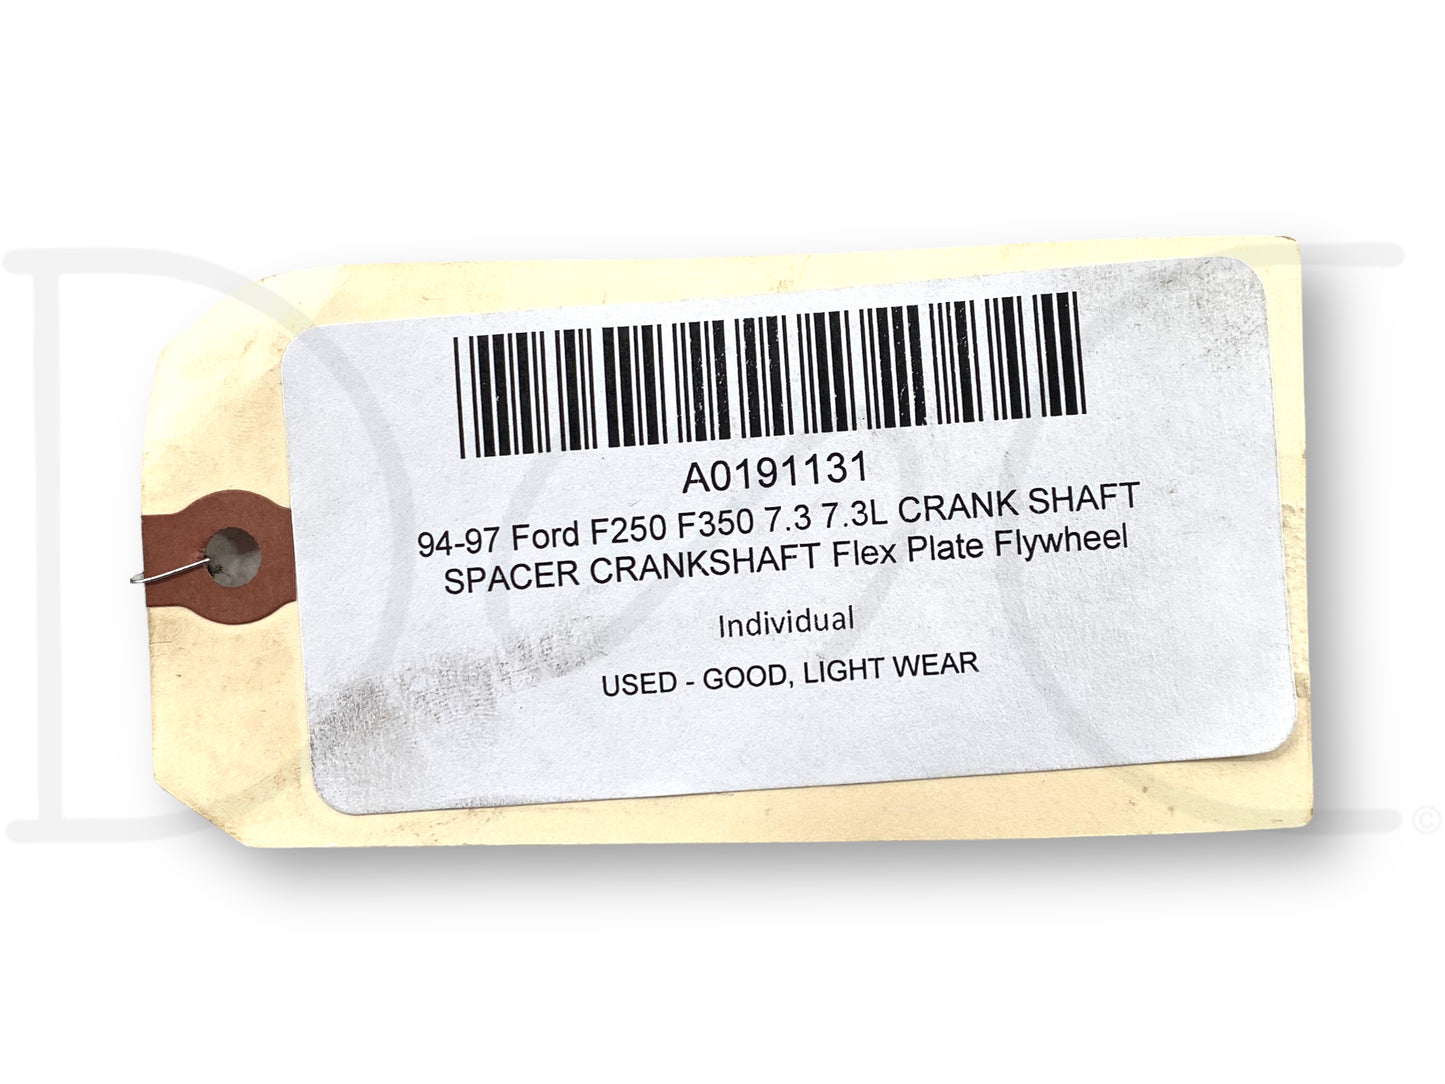 94-97 Ford F250 F350 7.3 7.3L Crank Shaft Spacer Crankshaft Flex Plate Flywheel